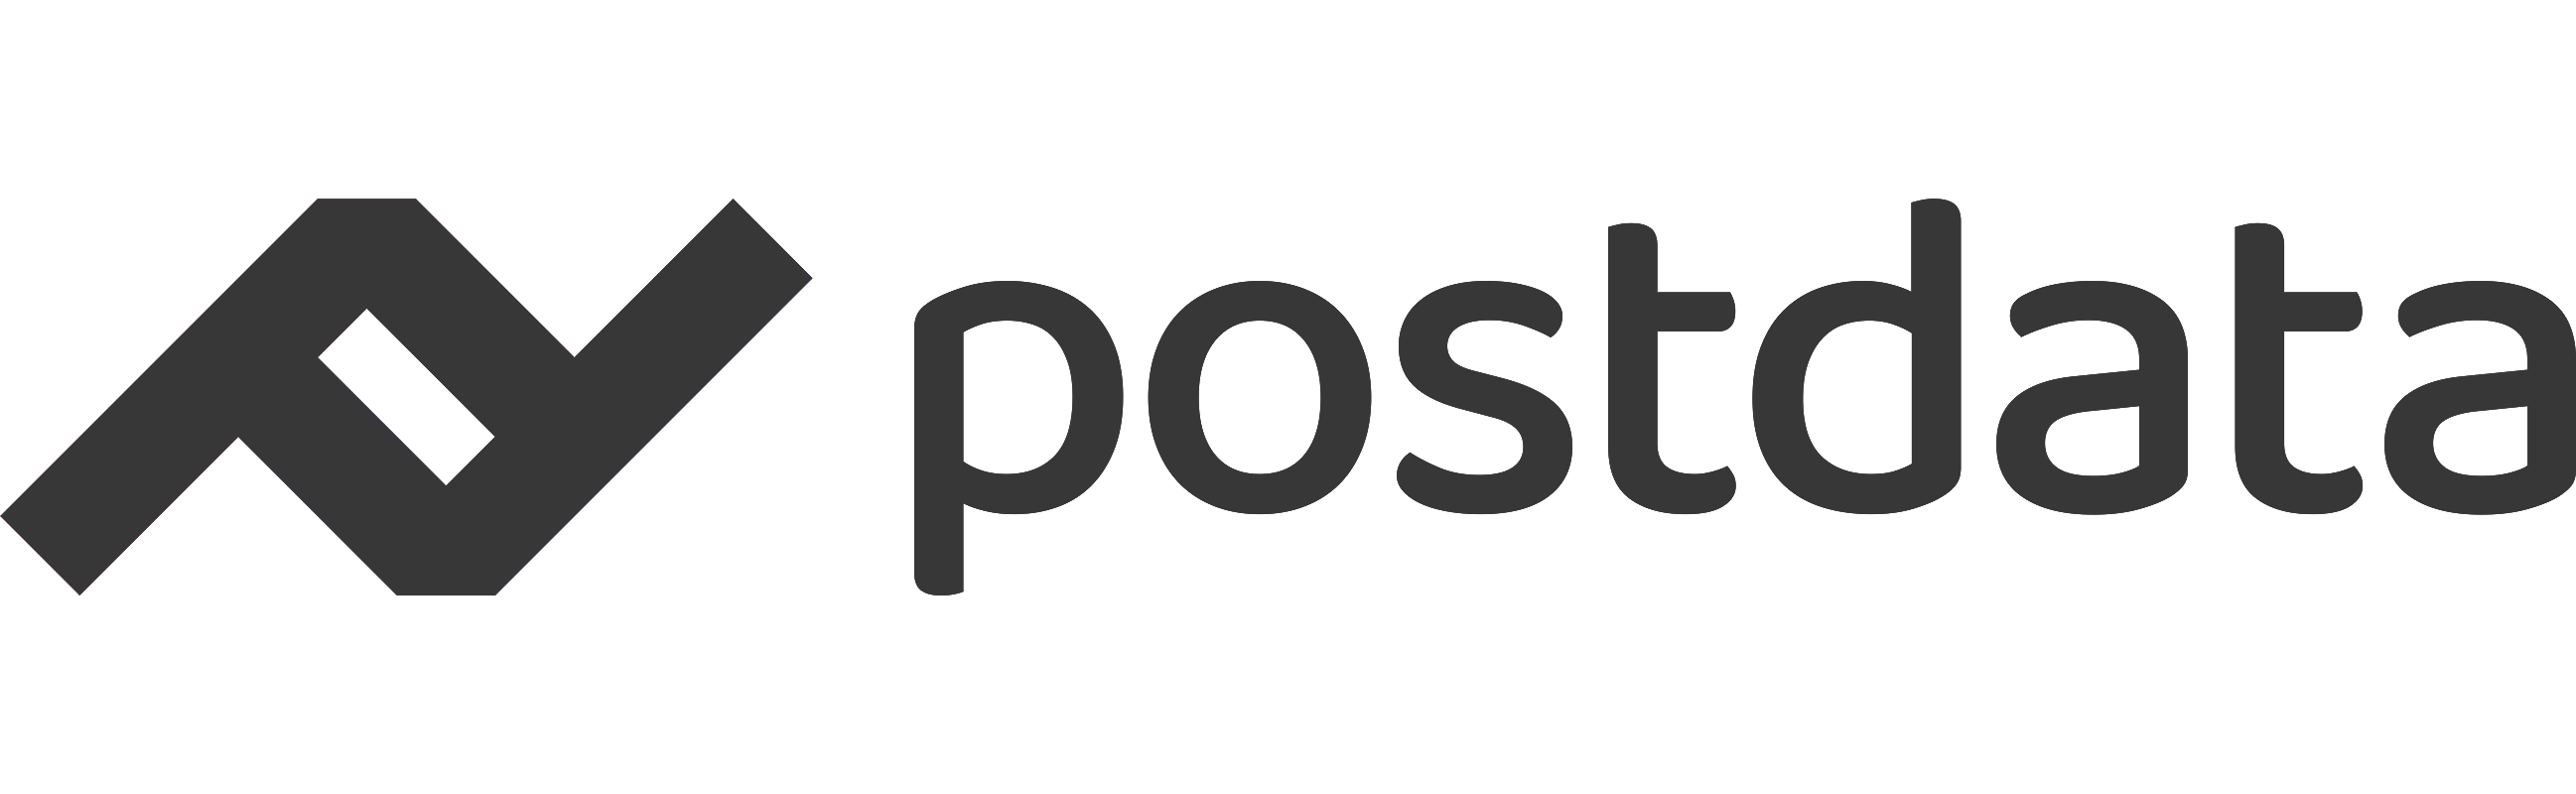 postdata-logo